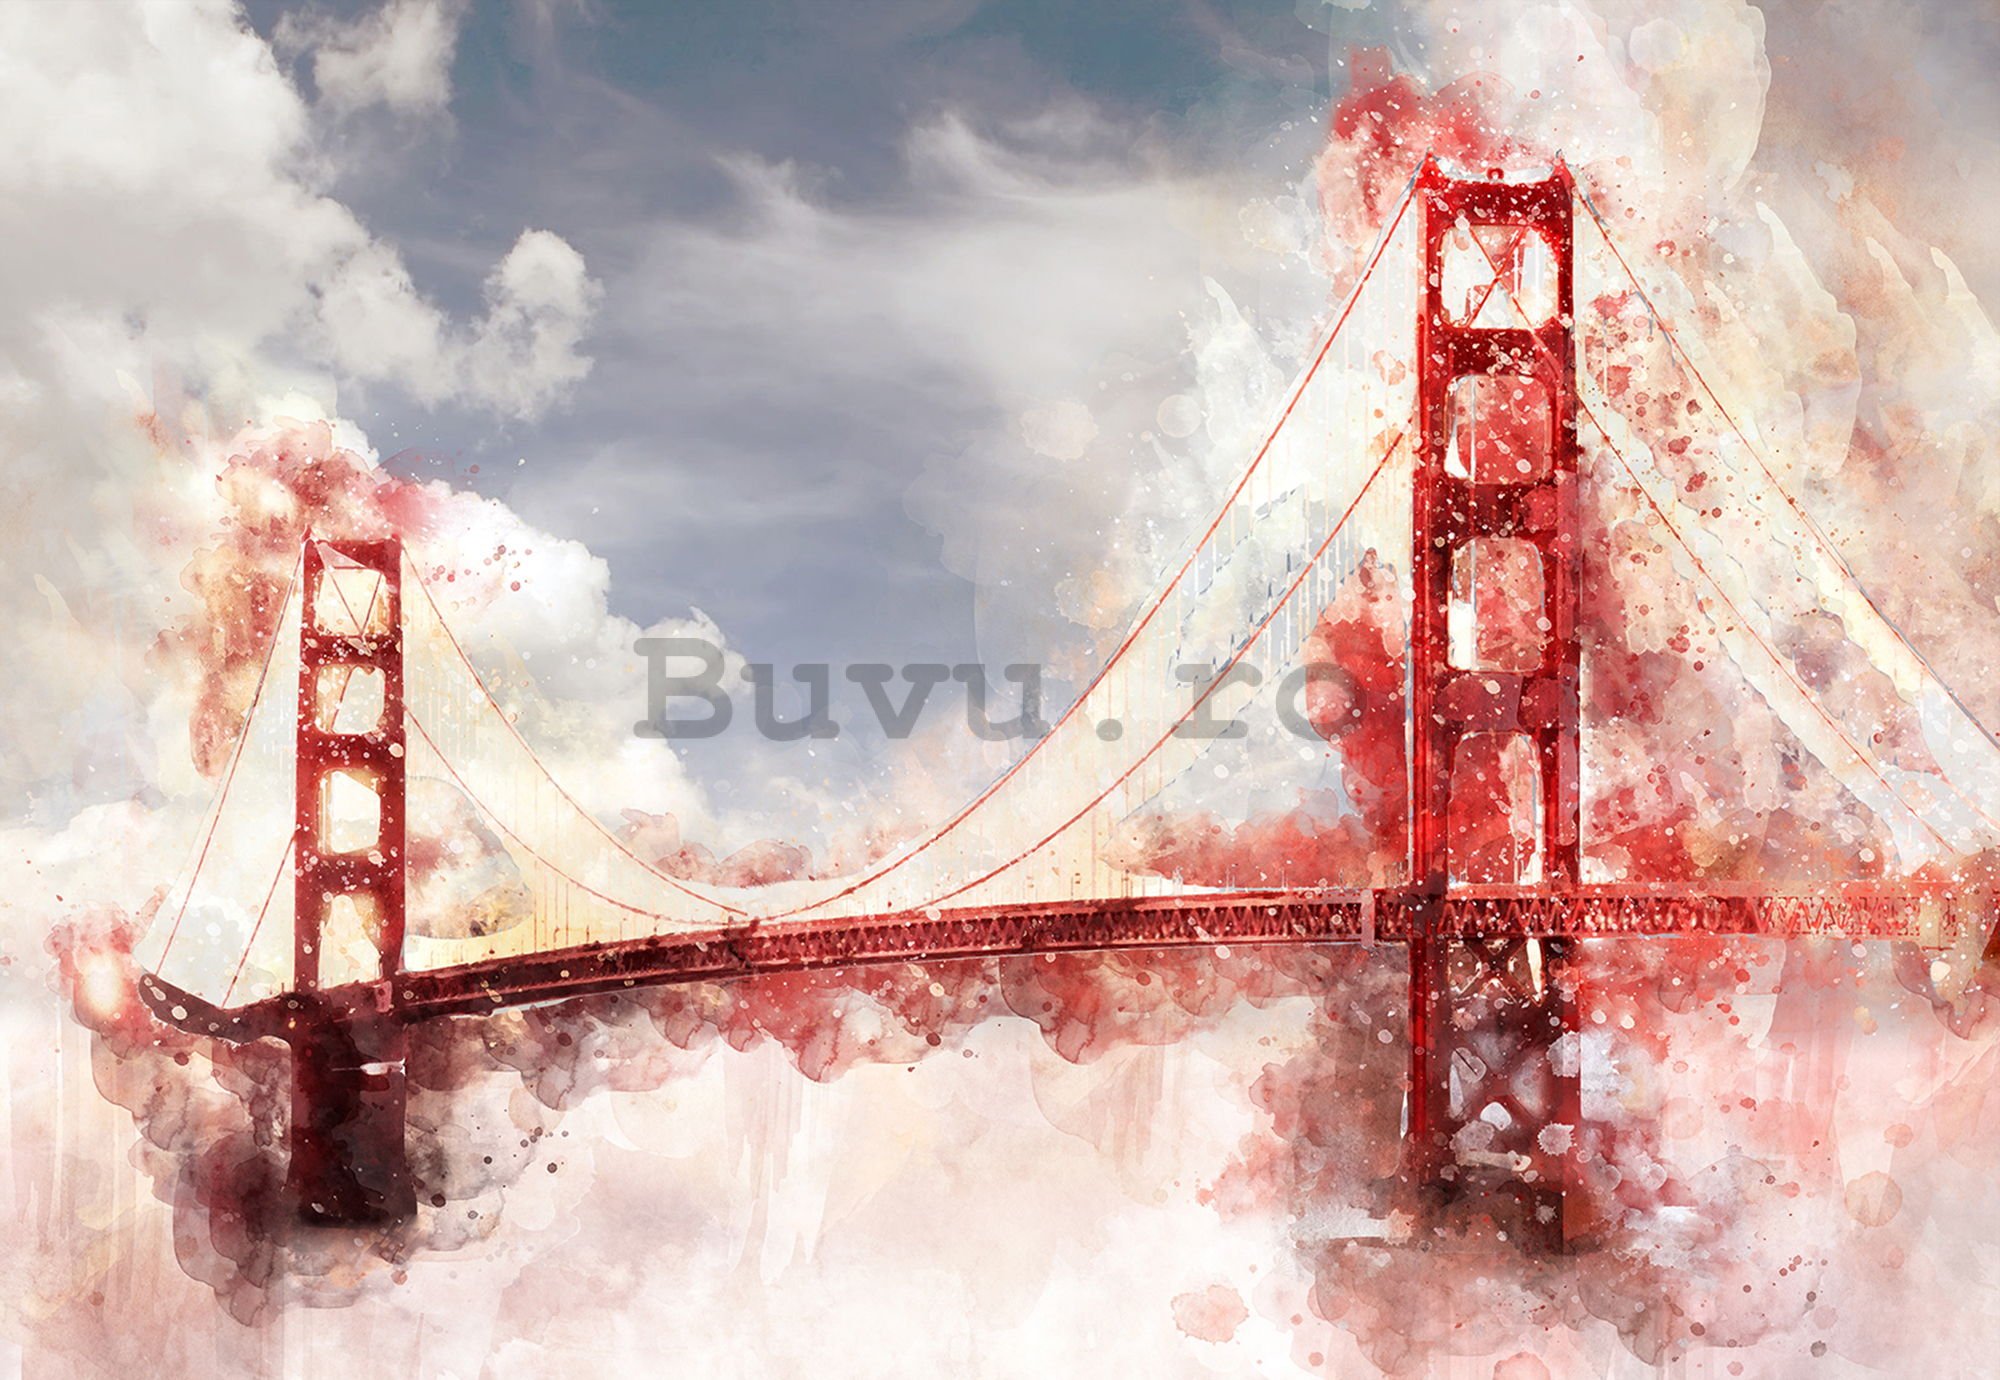 Fototapet vlies: Golden Gate Bridge (pictata) - 184x254 cm